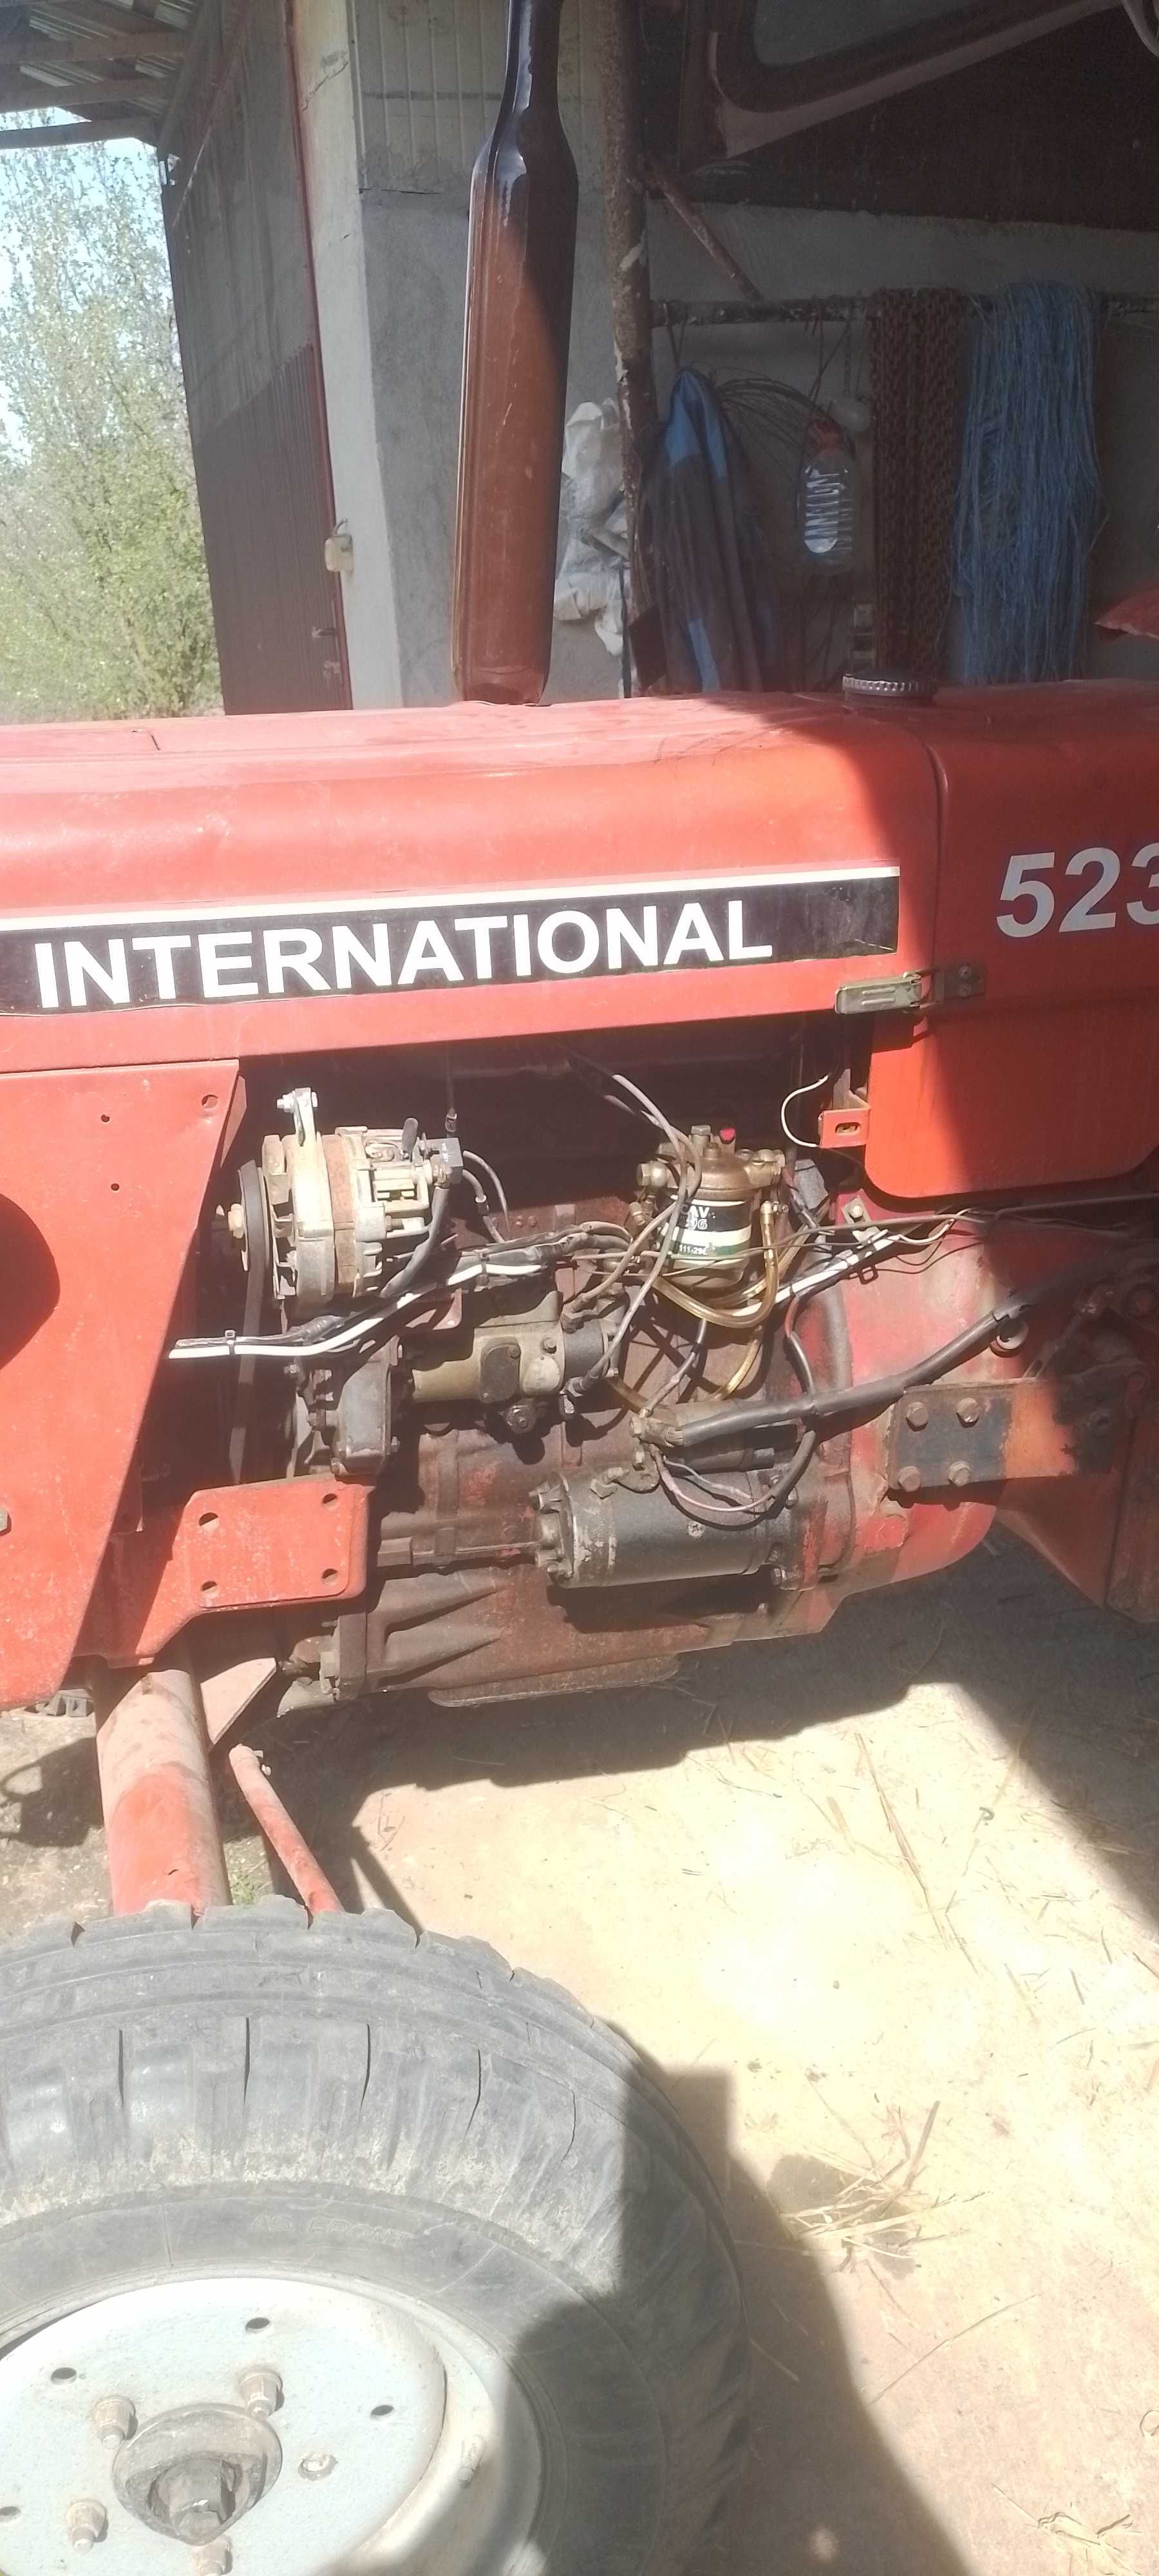 Vand tractor international 523 de 52 cp in stare buna cu carte rar ro